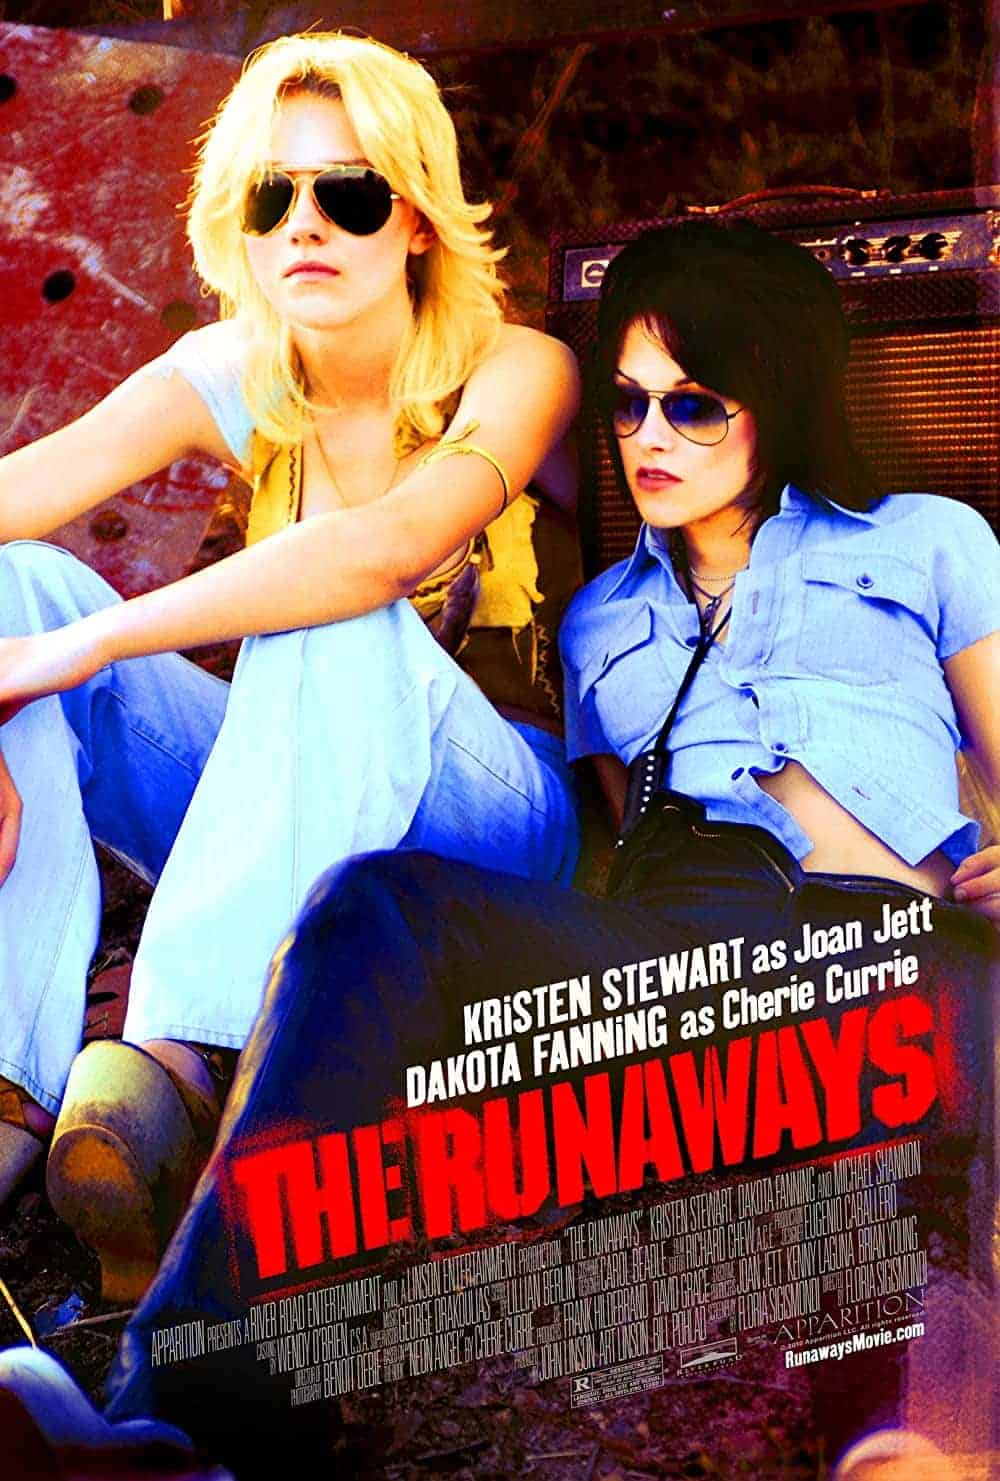 The Runaways (2010) Best Rock Movies to Watch